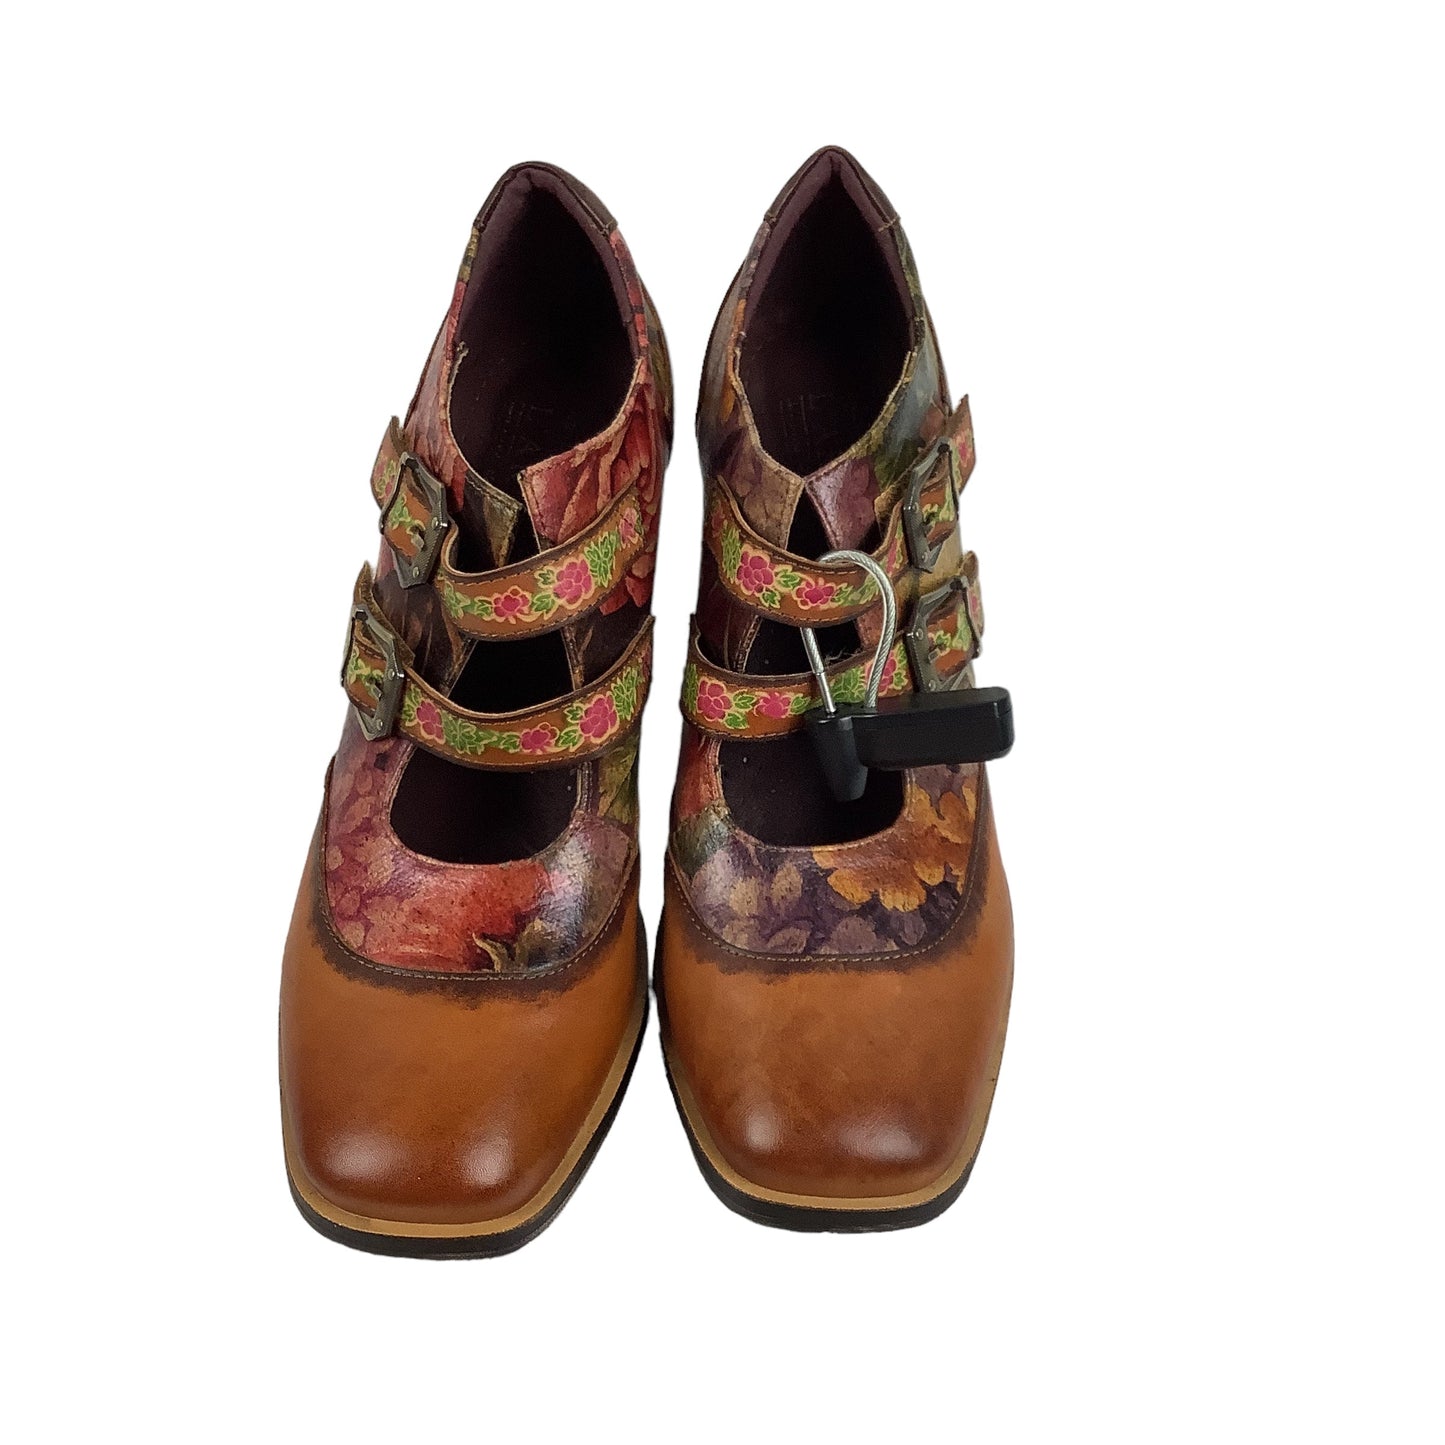 Brown Shoes Heels Block Cmc, Size 6.5 (37)